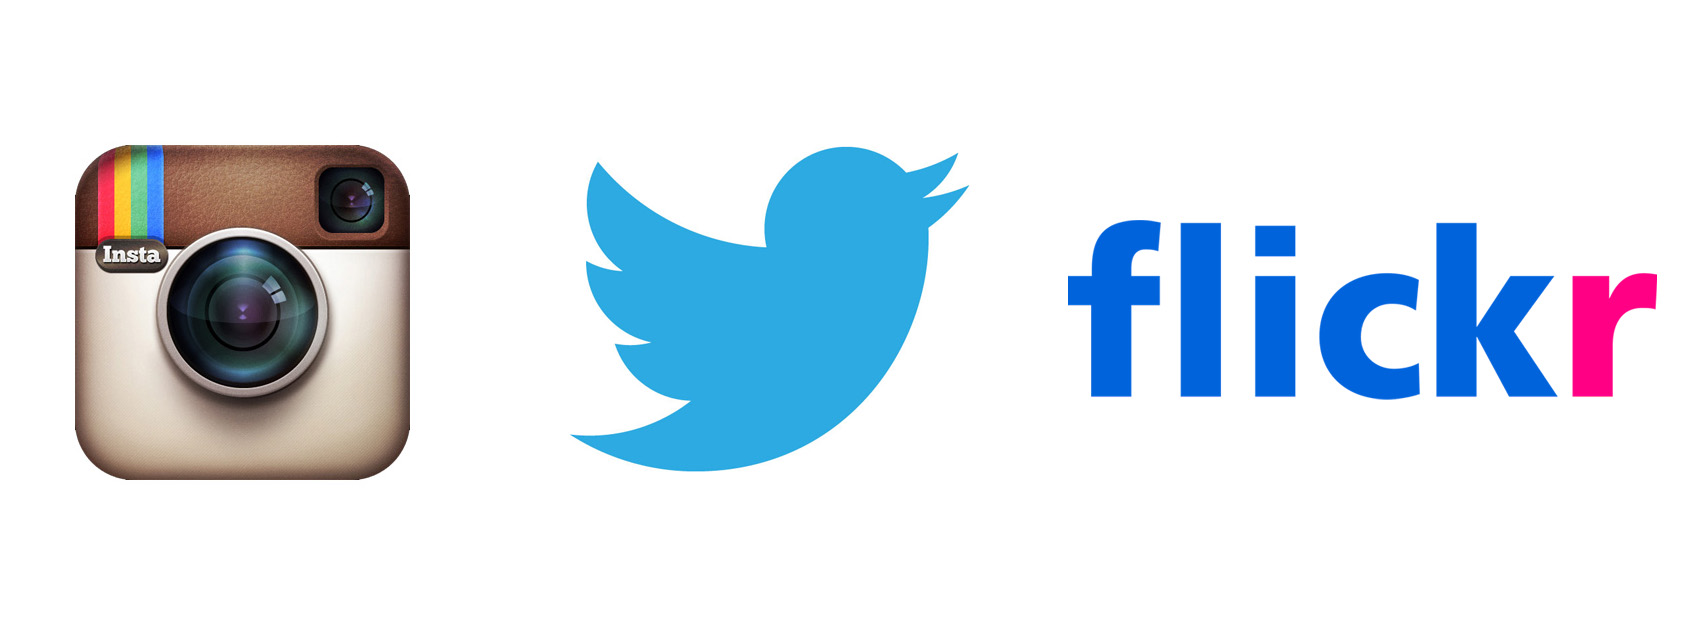 500 Twitter LOGO Latest Twitter Logo Icon GIF 